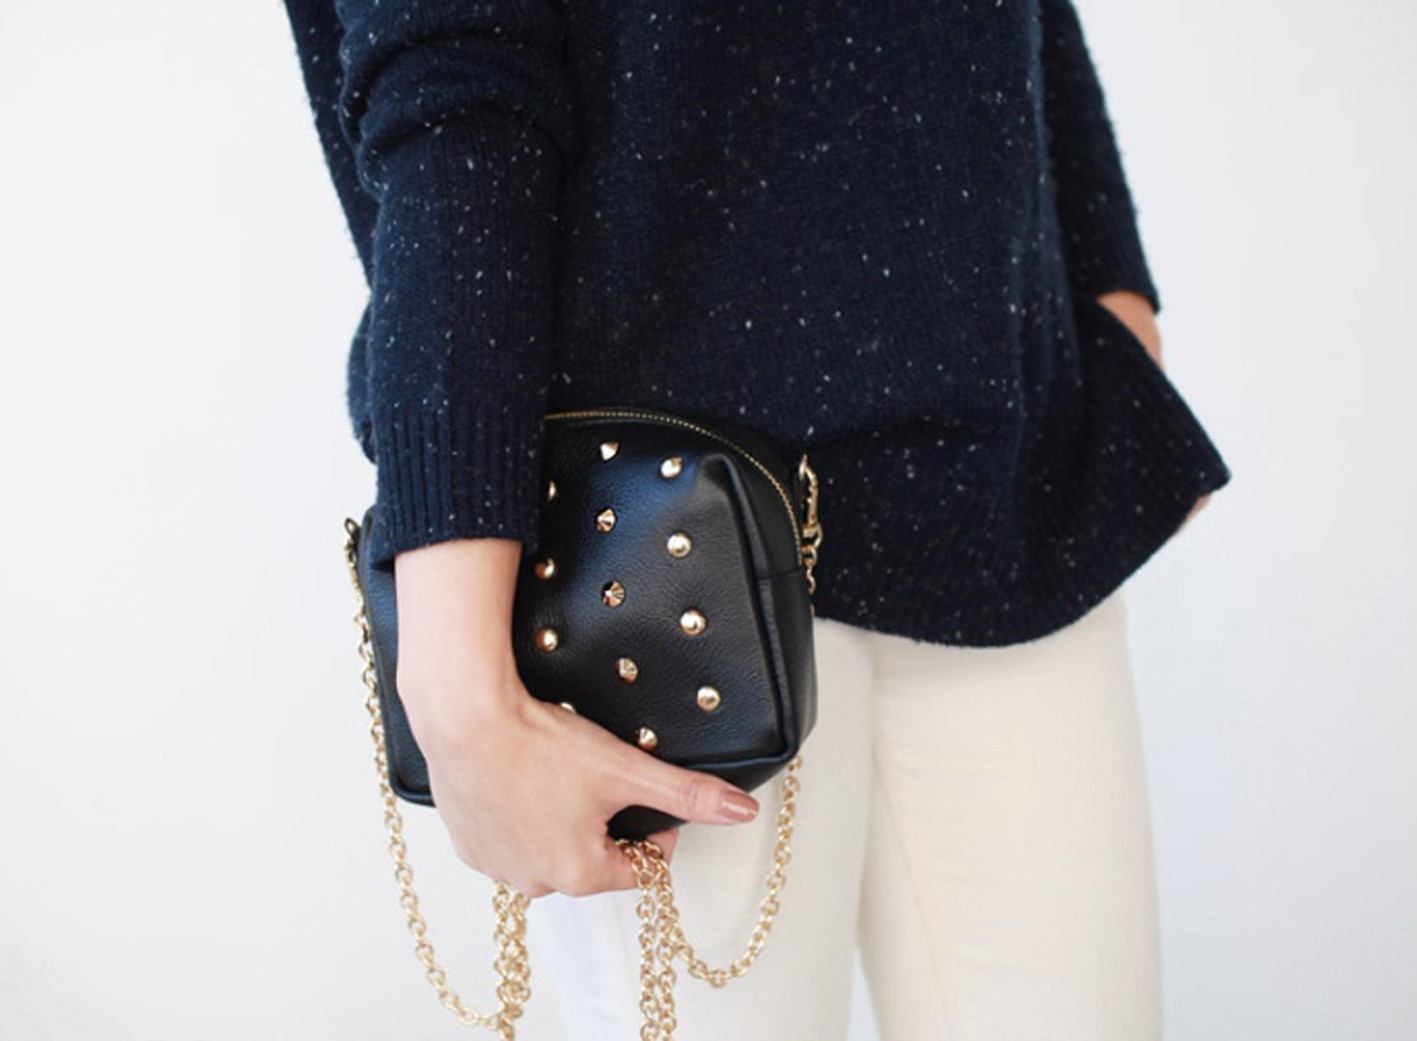 Chic Studded Black Little Purse. Black Genuine Leather Handbag.Studs Clutch Bag - Handbags & Purses